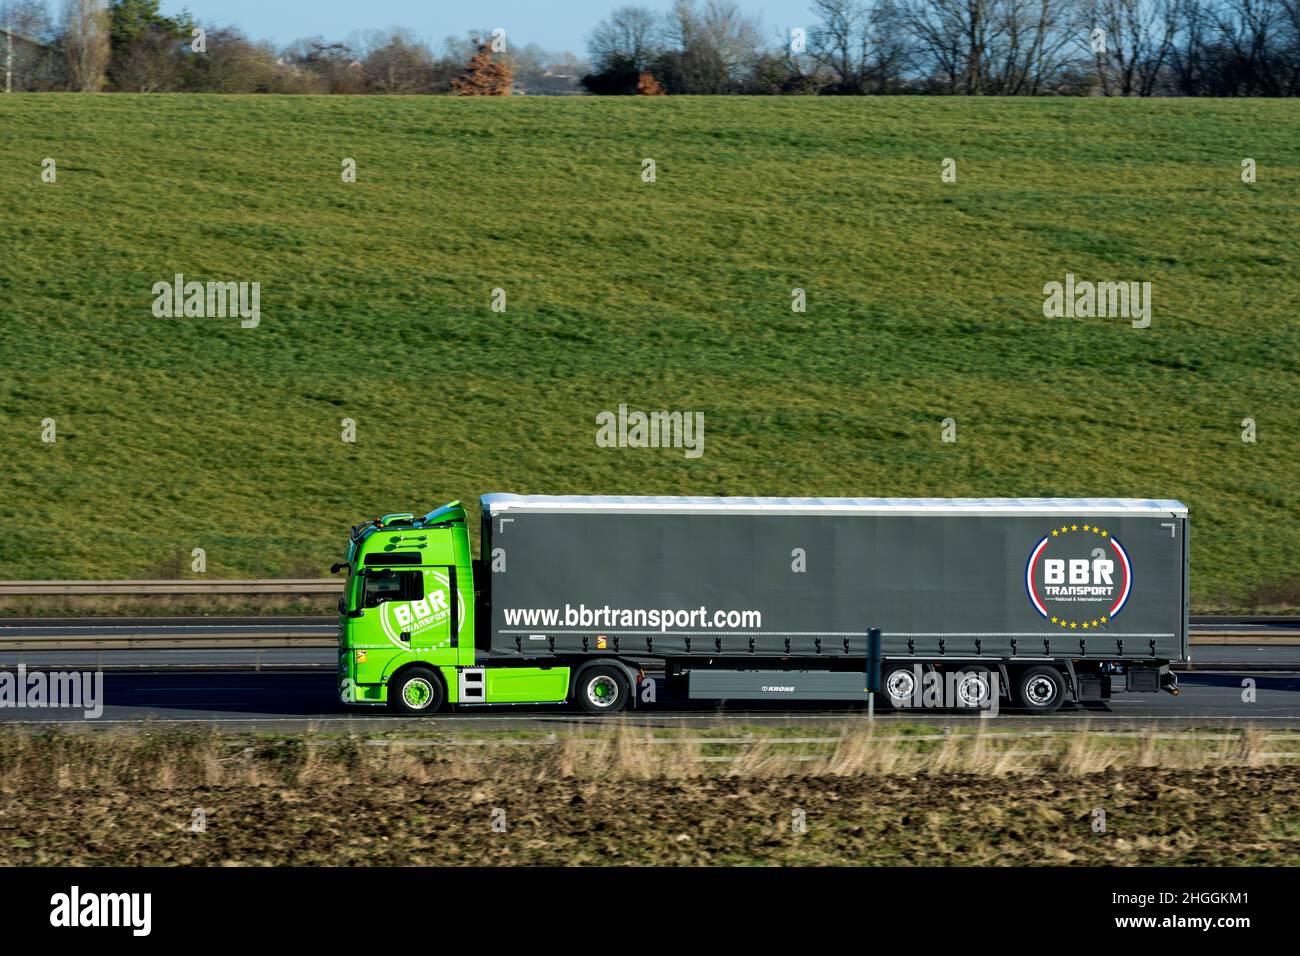 BBR Transport lorry on the M40 motorway, Warwickshire, UK Stock Photo